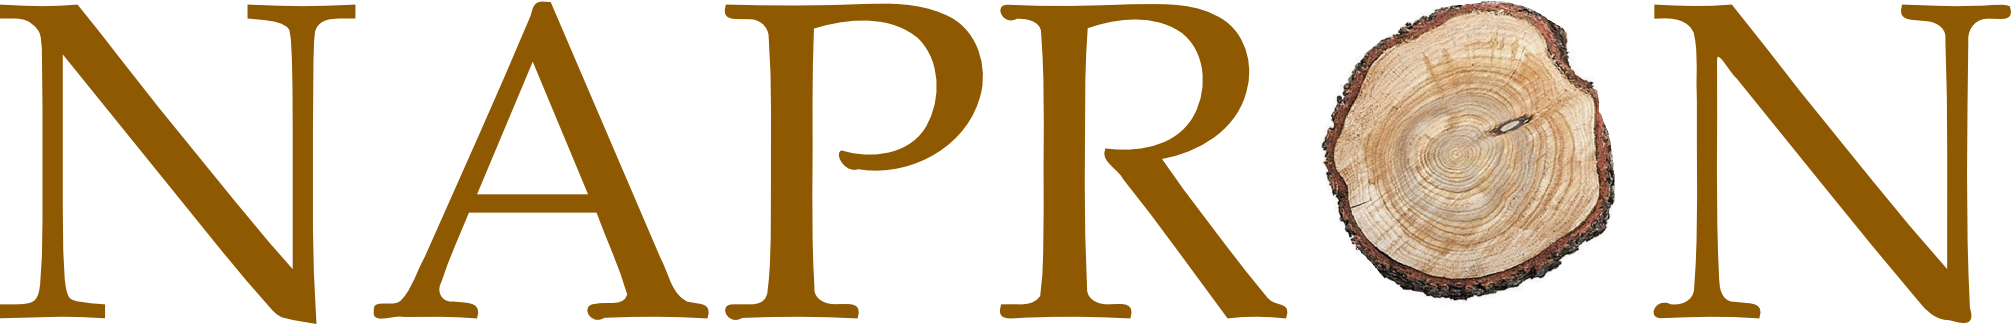 Napron_logo